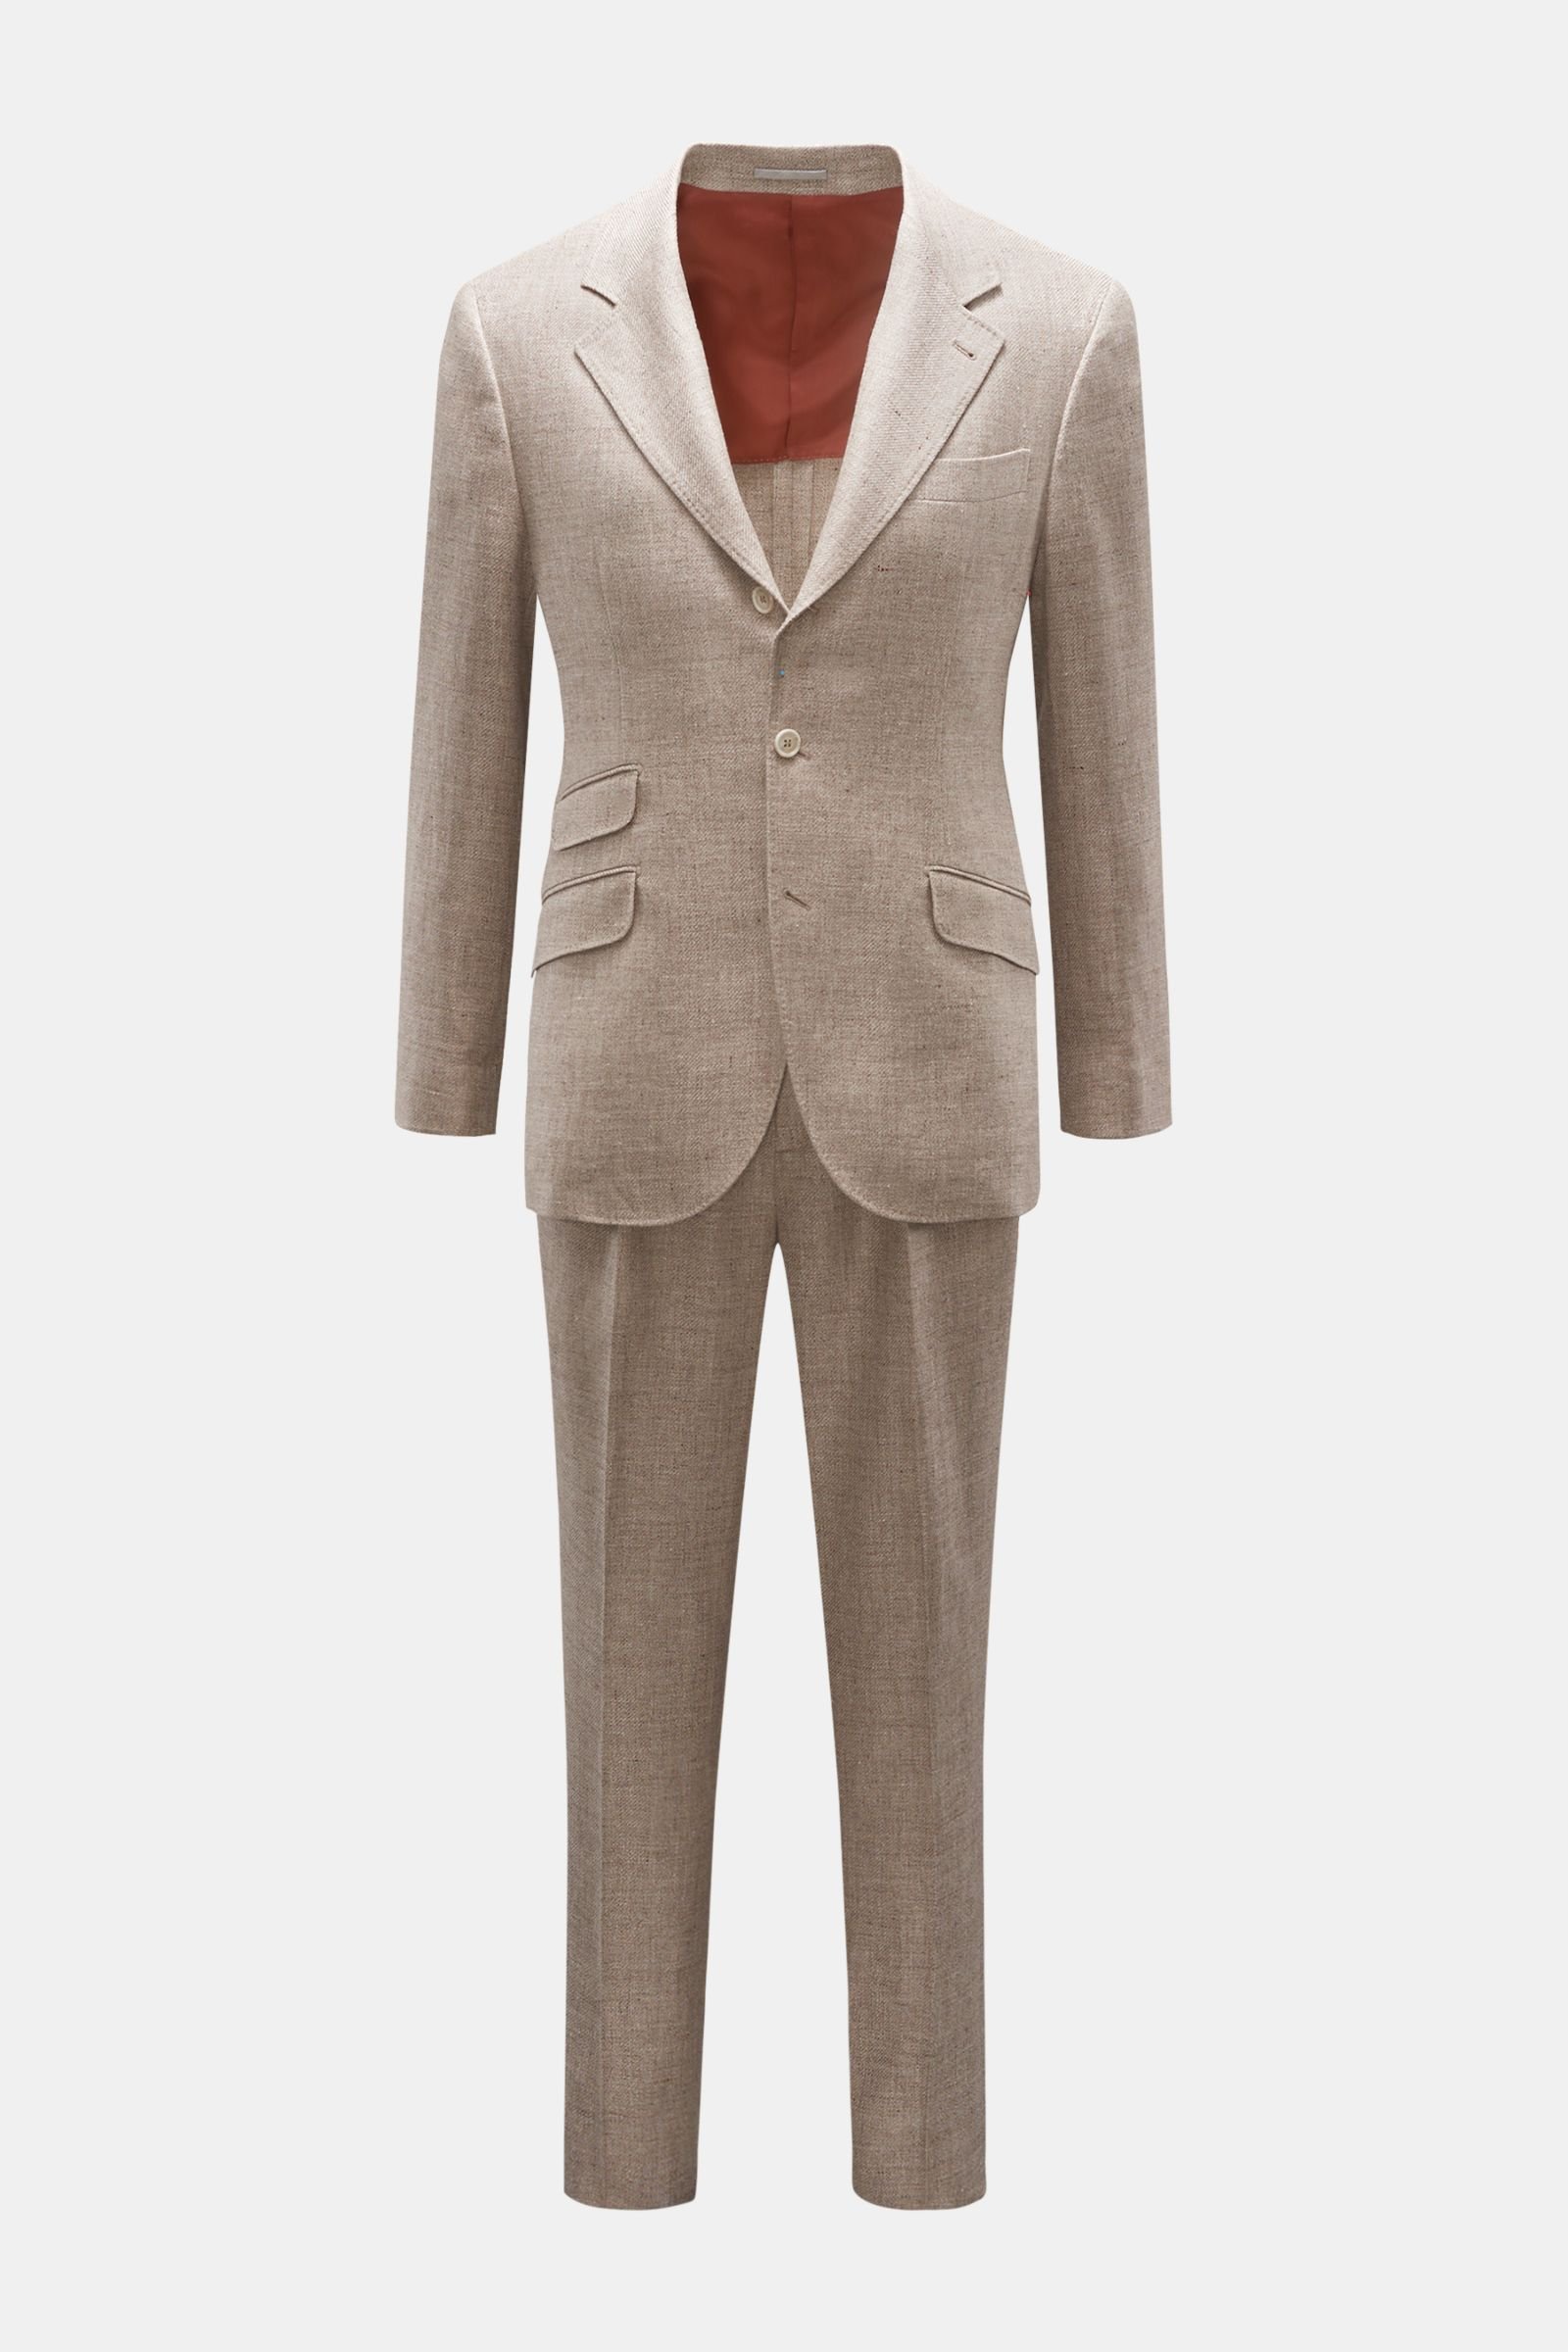 Suit grey-brown